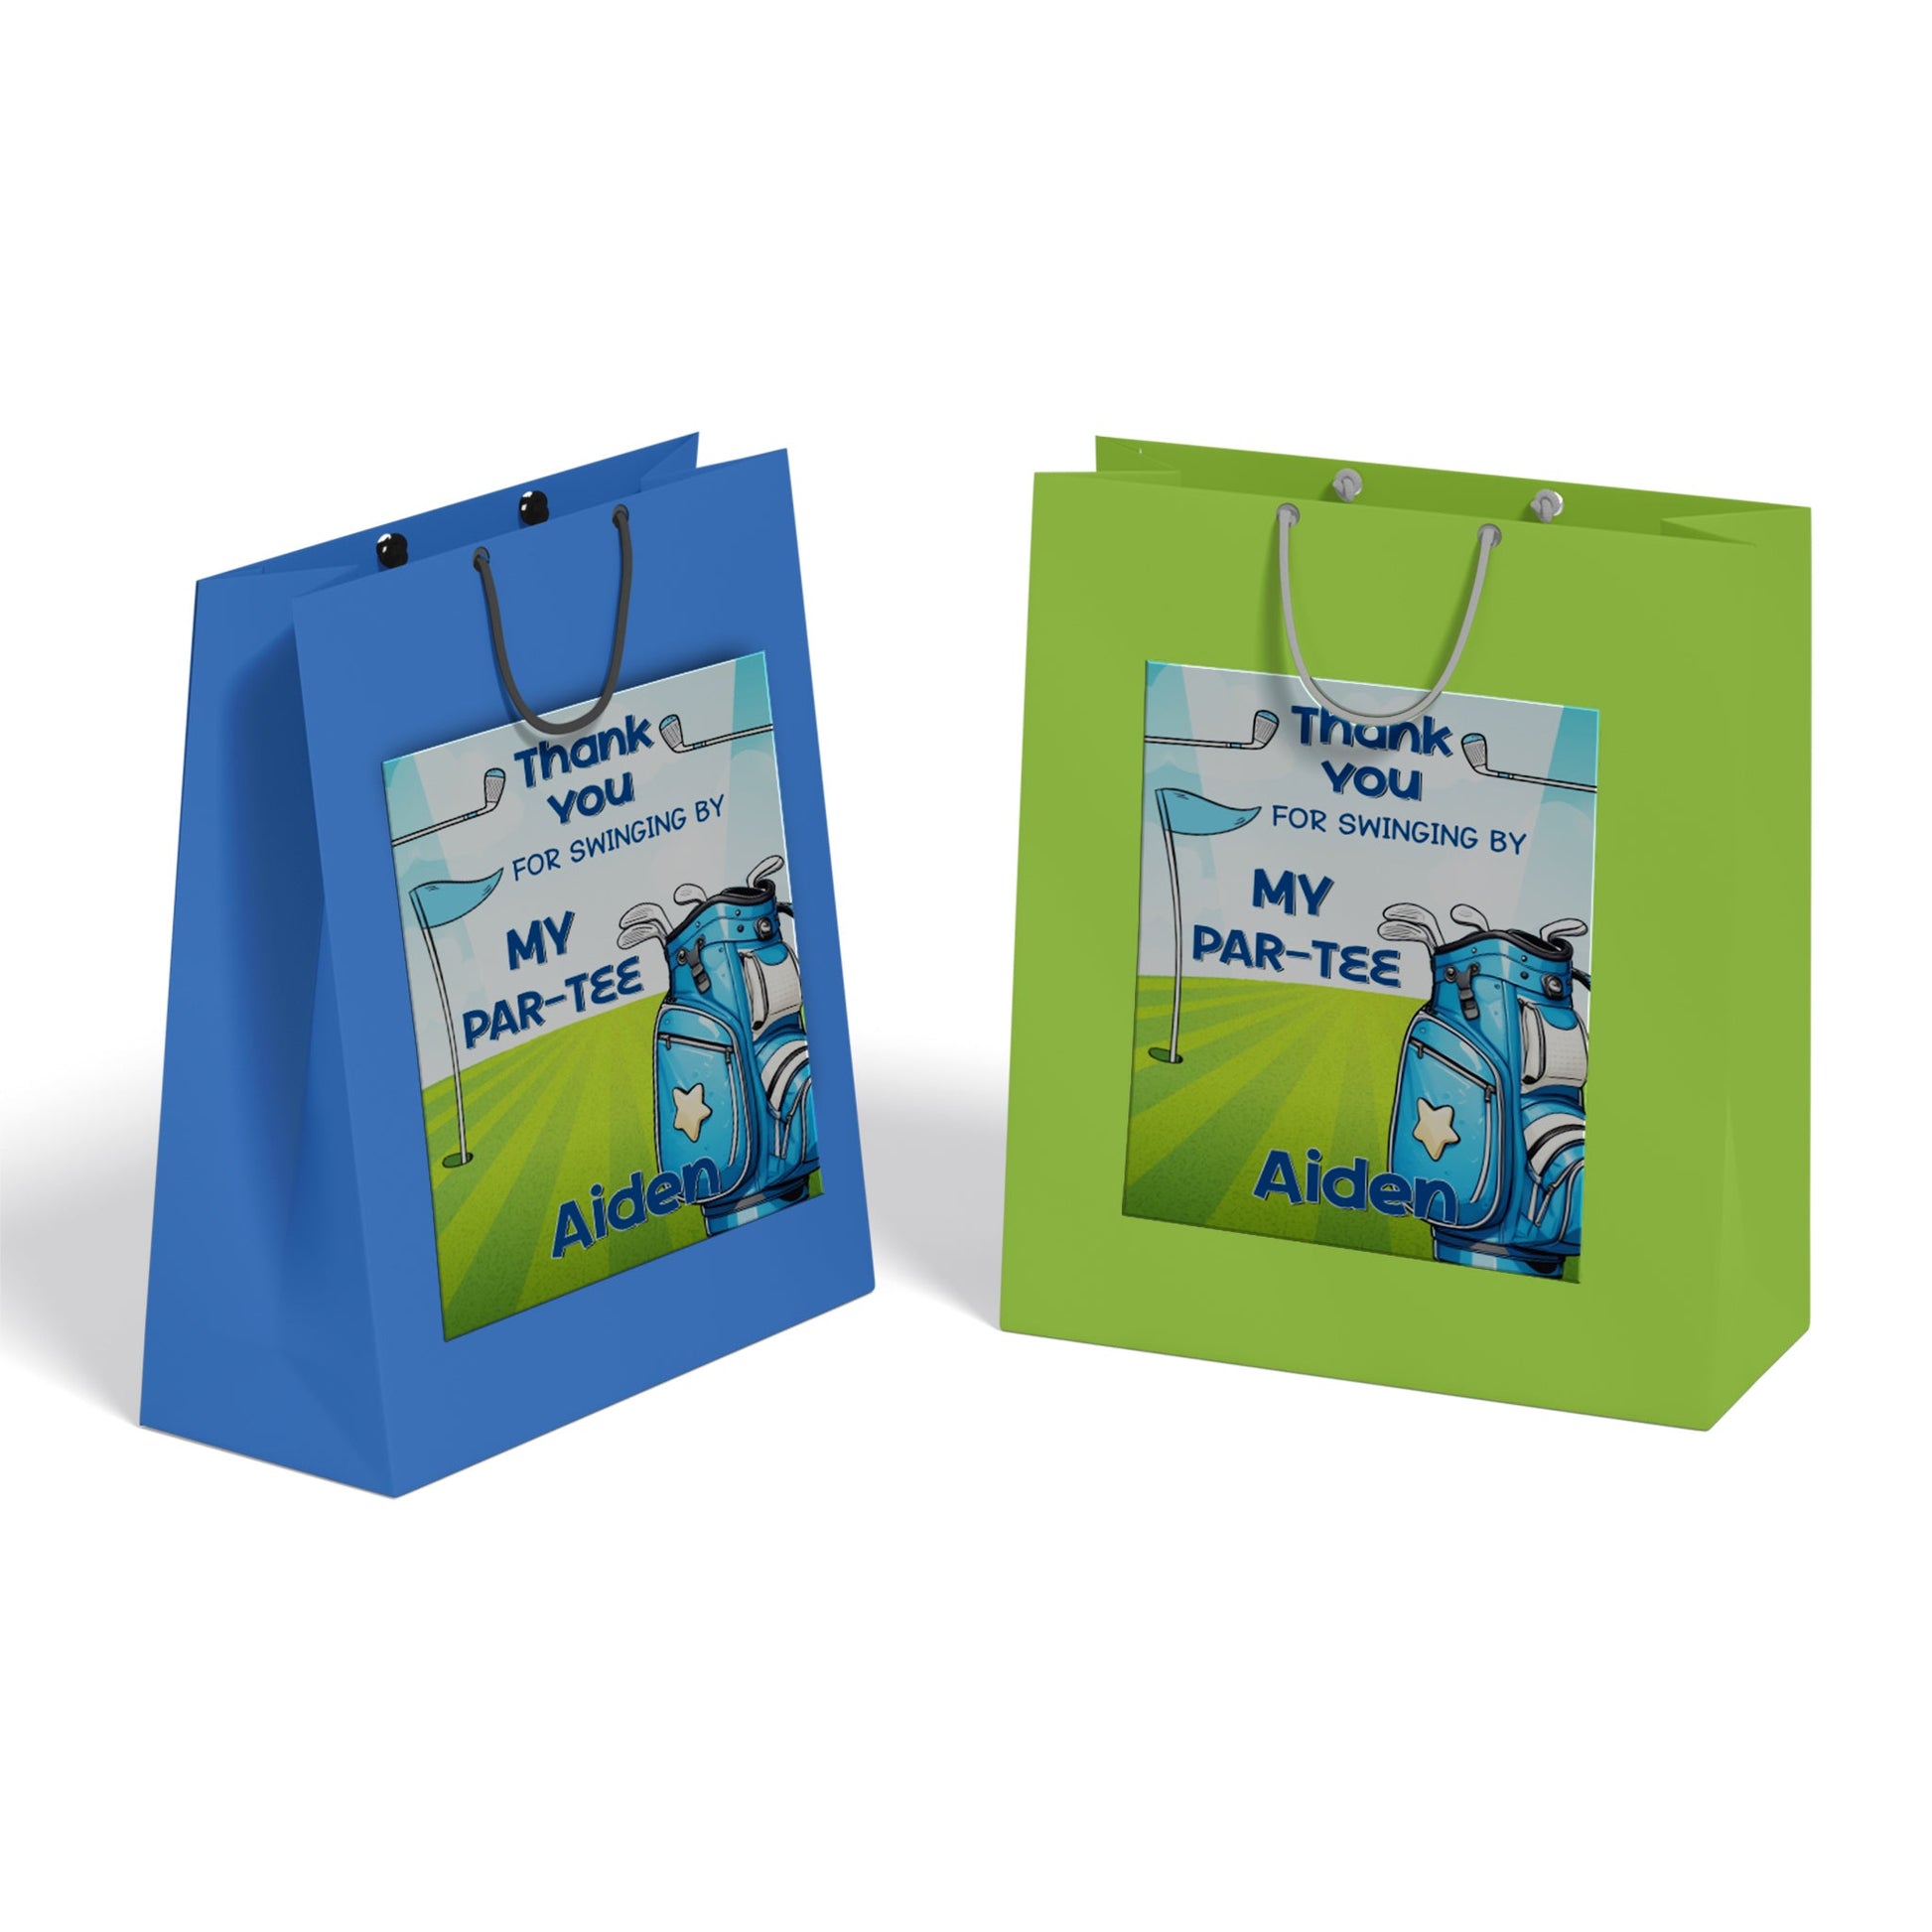 Mini Golf Goody Bag Label: Personalized goody bag labels featuring mini golf art